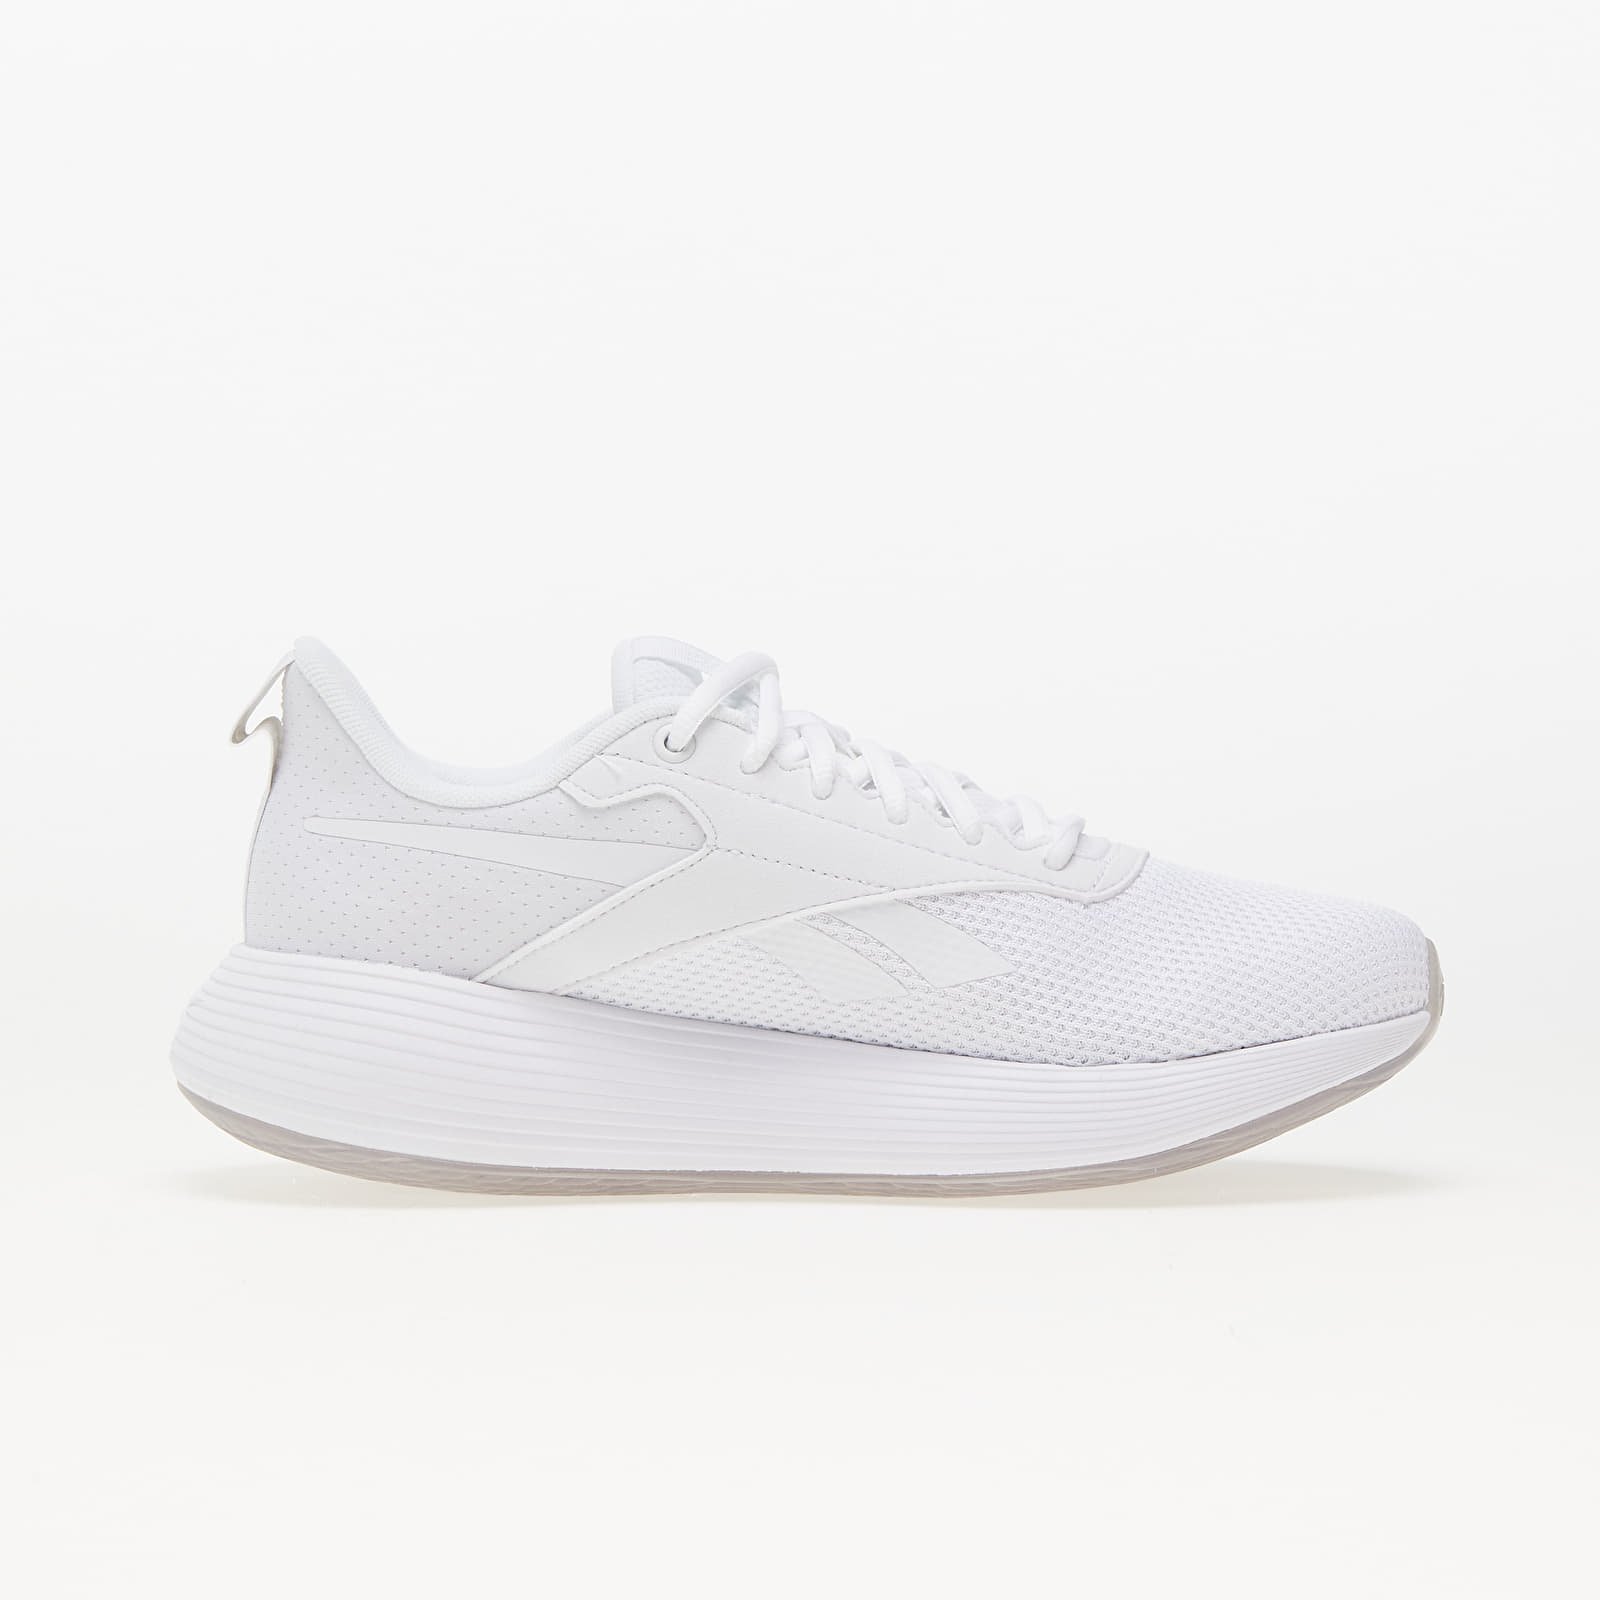 DMX Comfort + White, Low-top sneakers